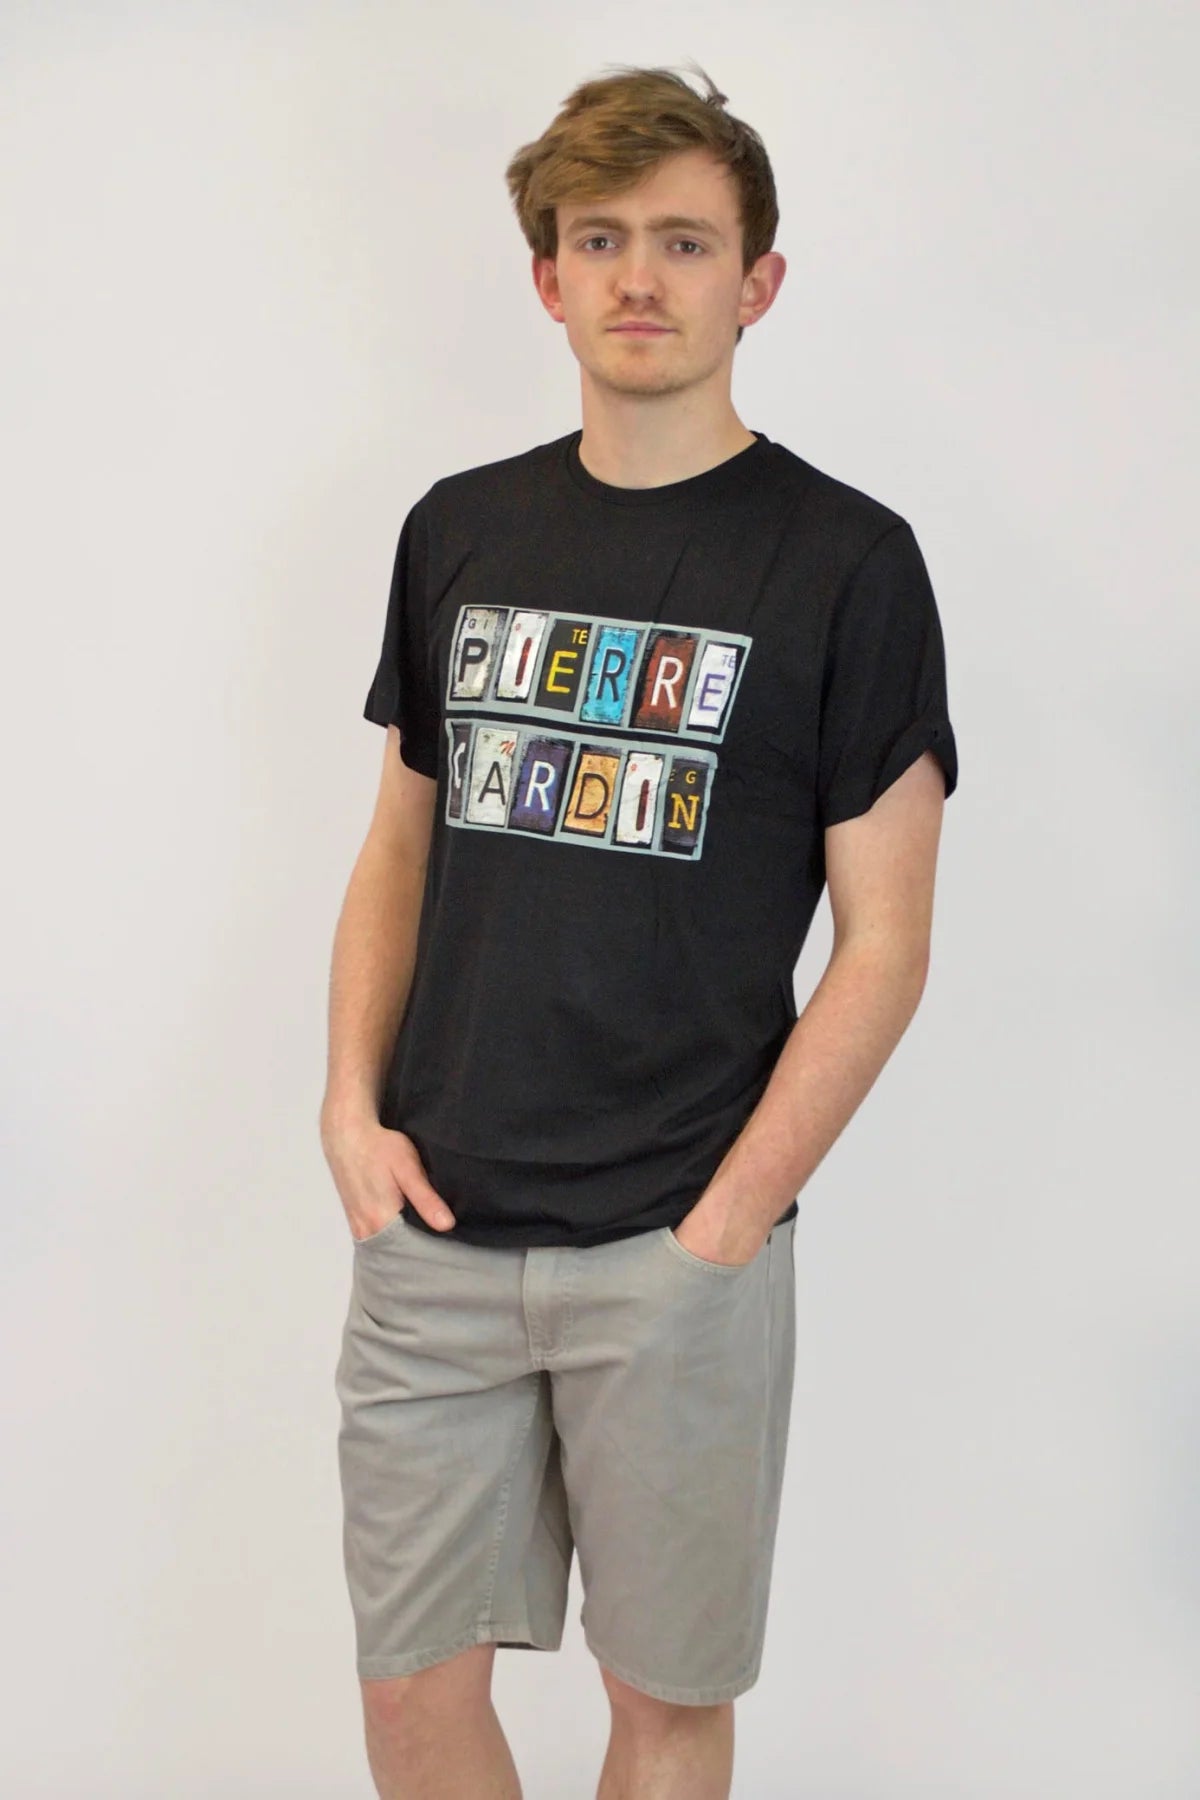 Pierre Cardin Graphic T Shirt Black / XS